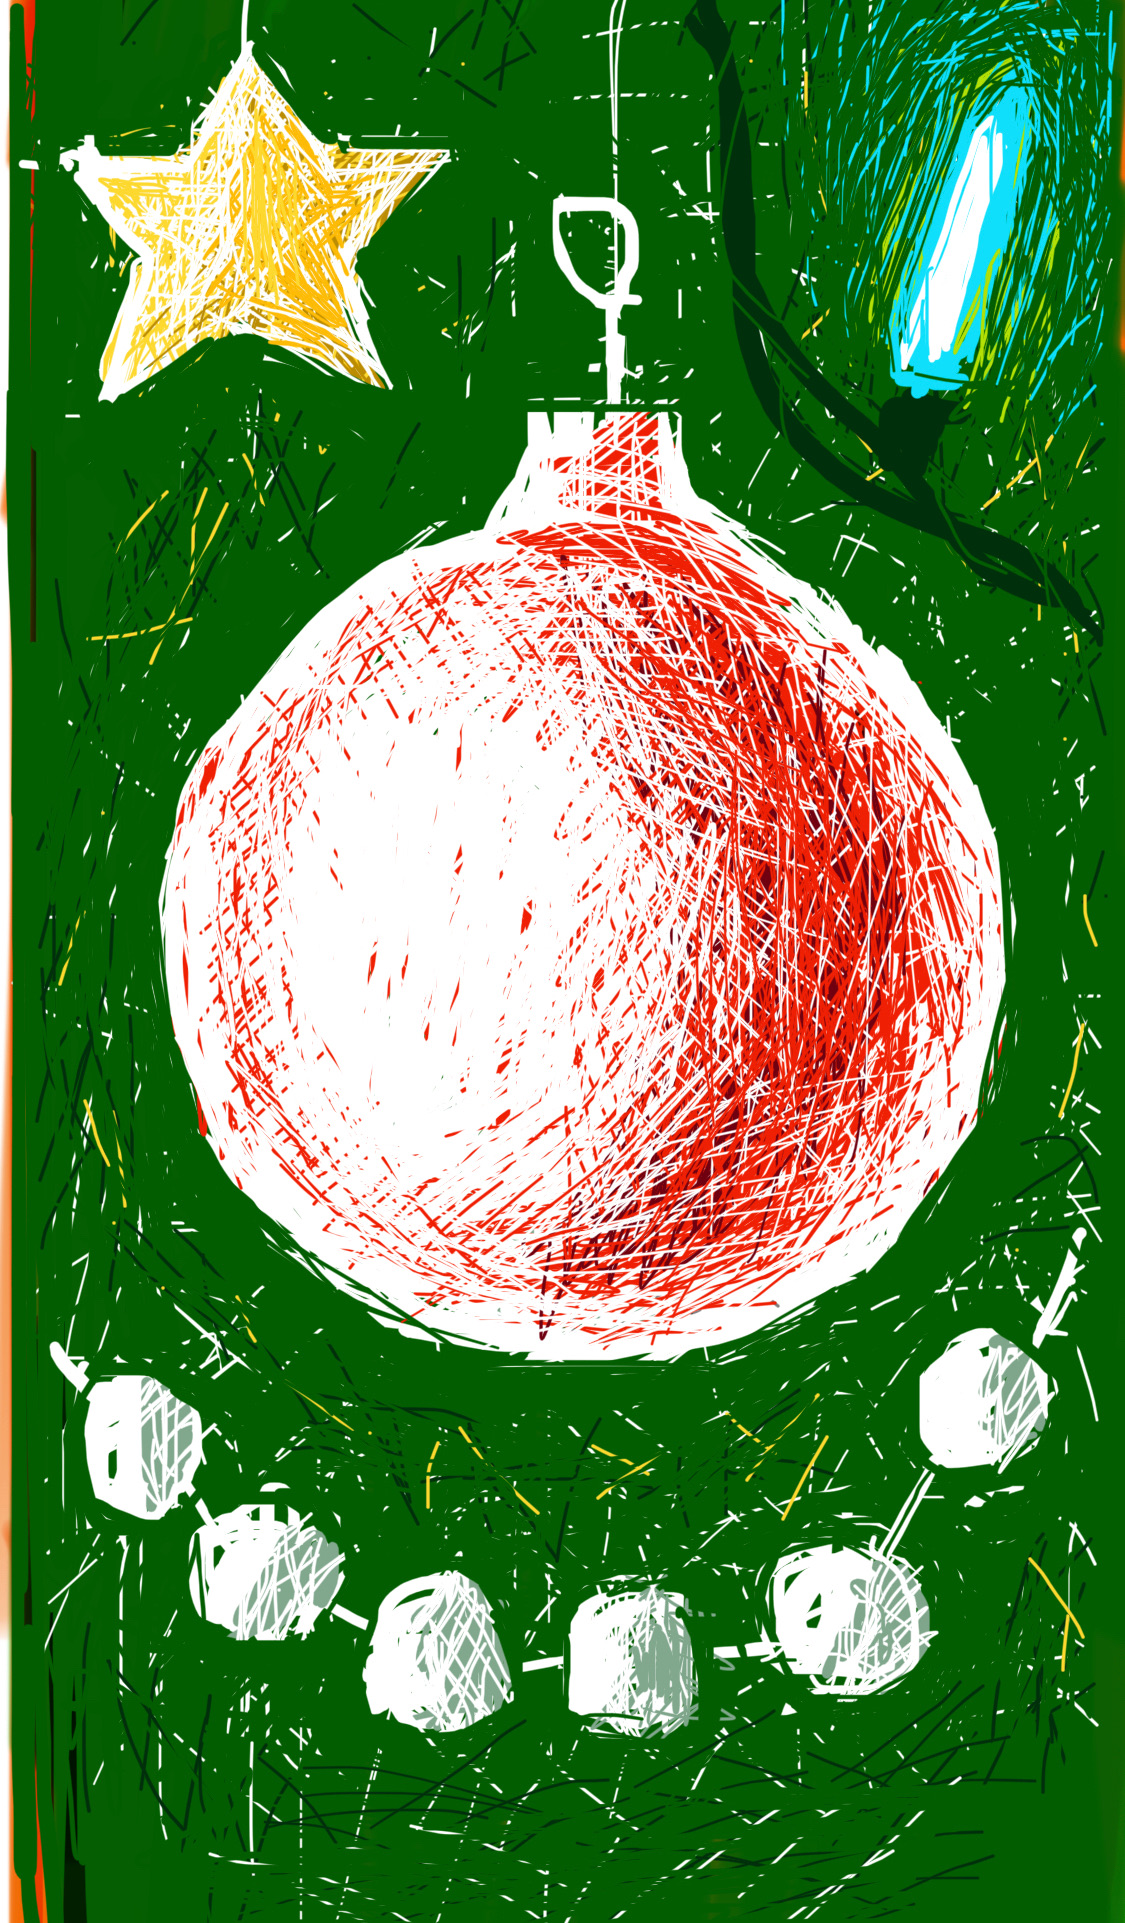 Christmas ornaments on a tree: a ball, beads, a star, and a bulb